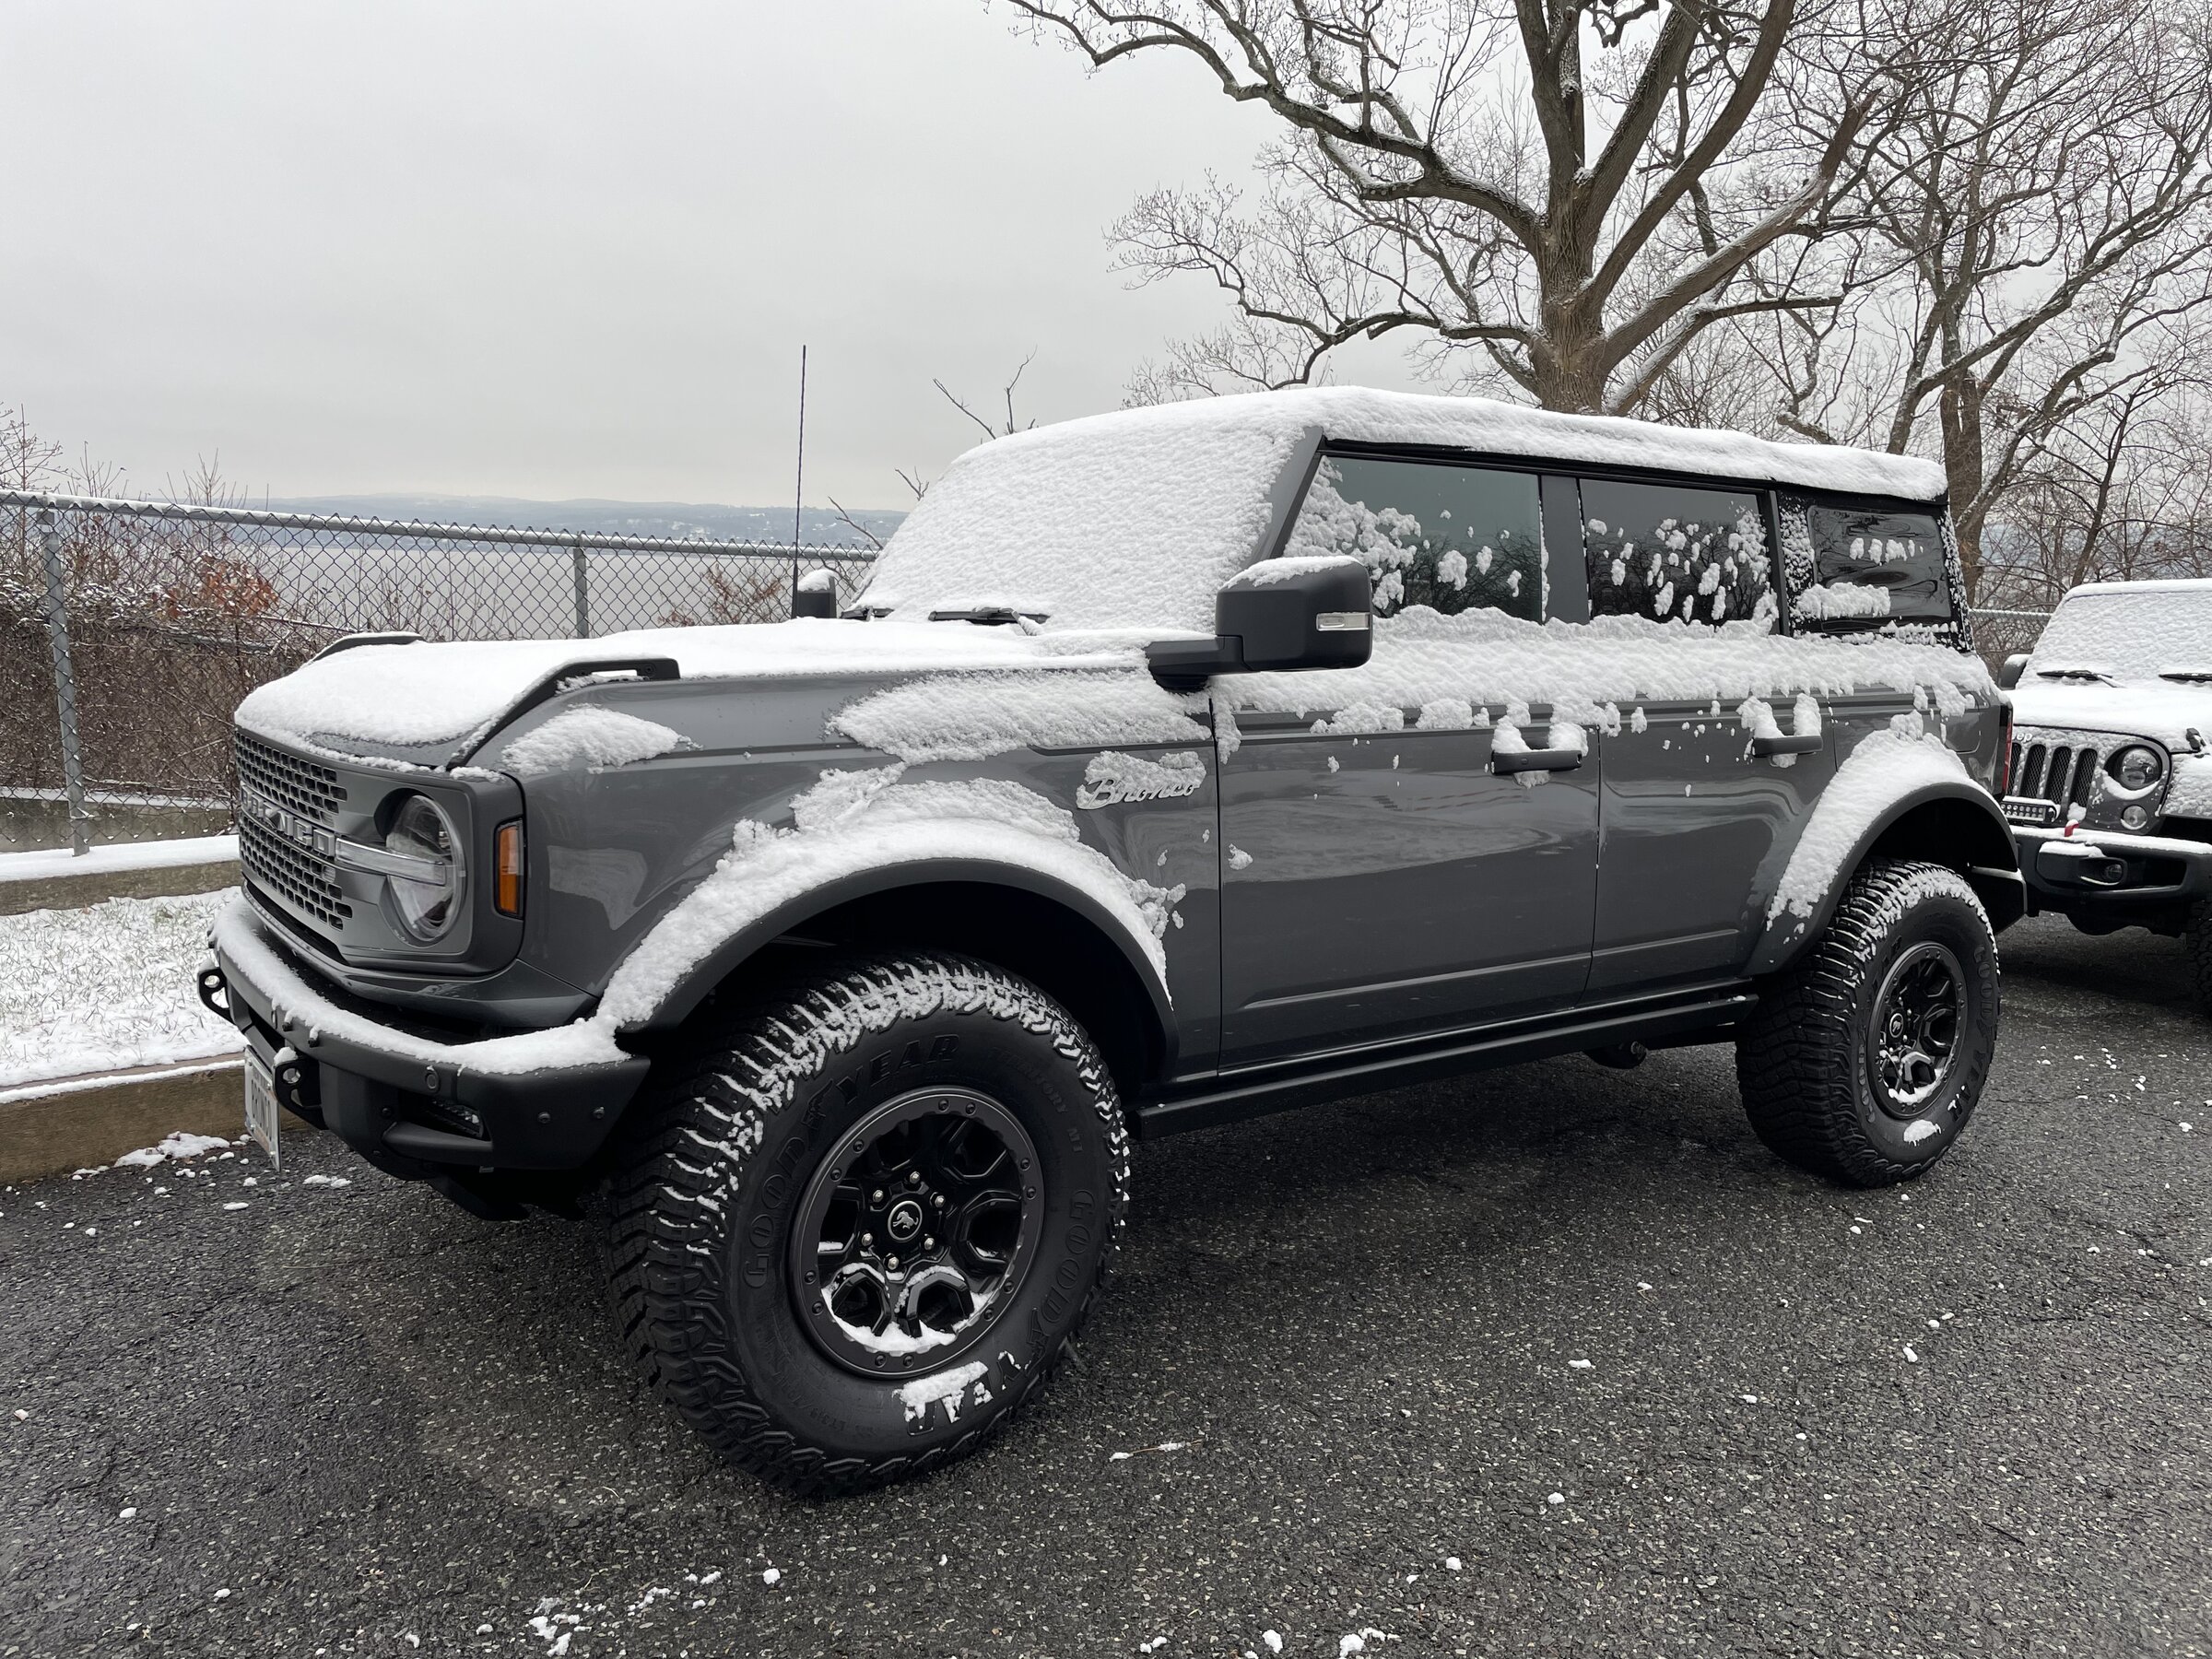 Ford Bronco Share your snowy Bronco pics! B231B130-3F74-41FB-AEBC-C46EC35C4DE6